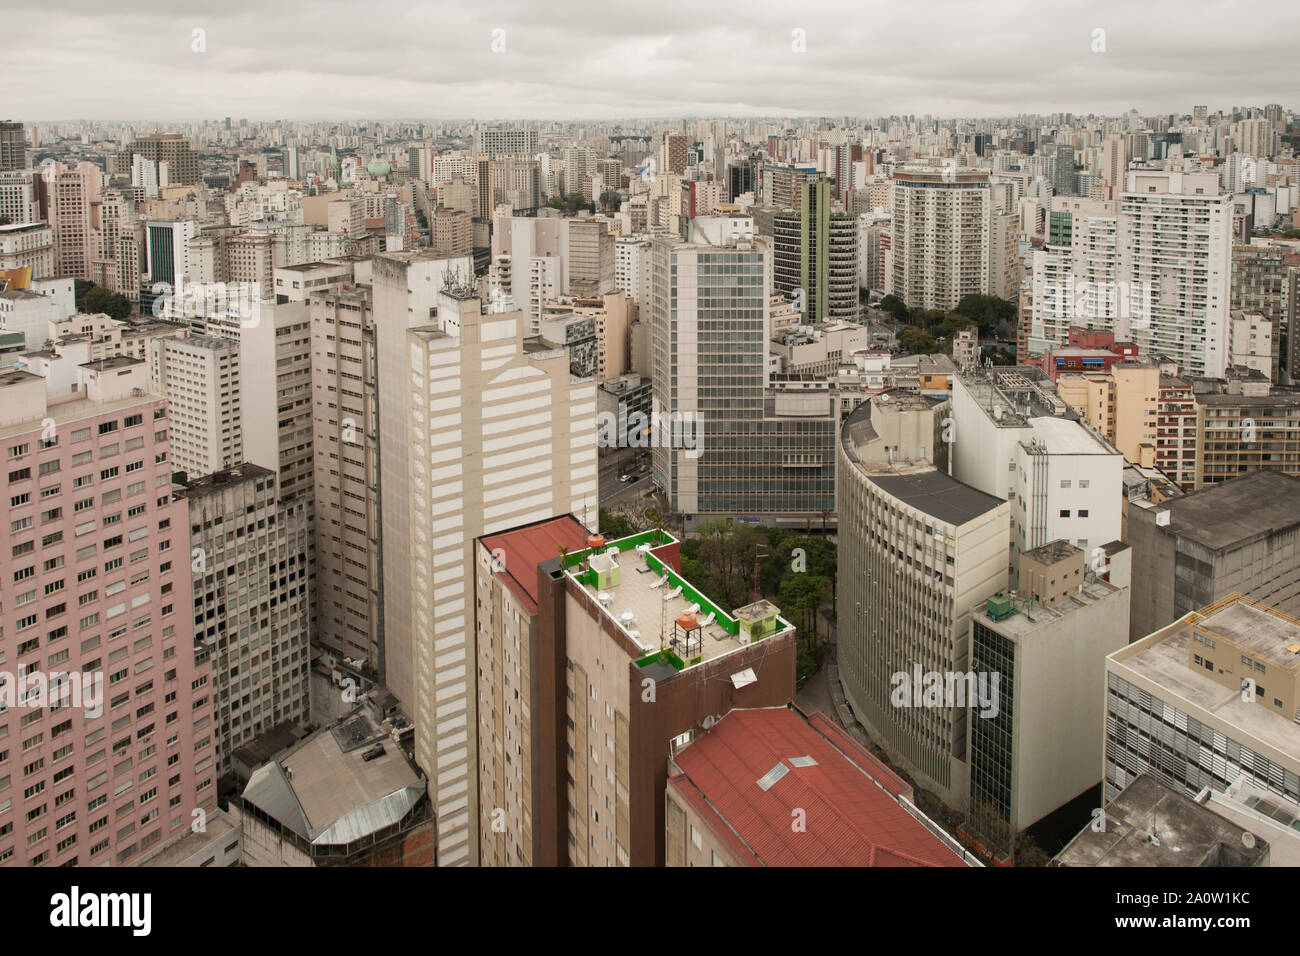 São Paulo seen from the Copan building Building in São Paulo, Brazil. Stock Photo